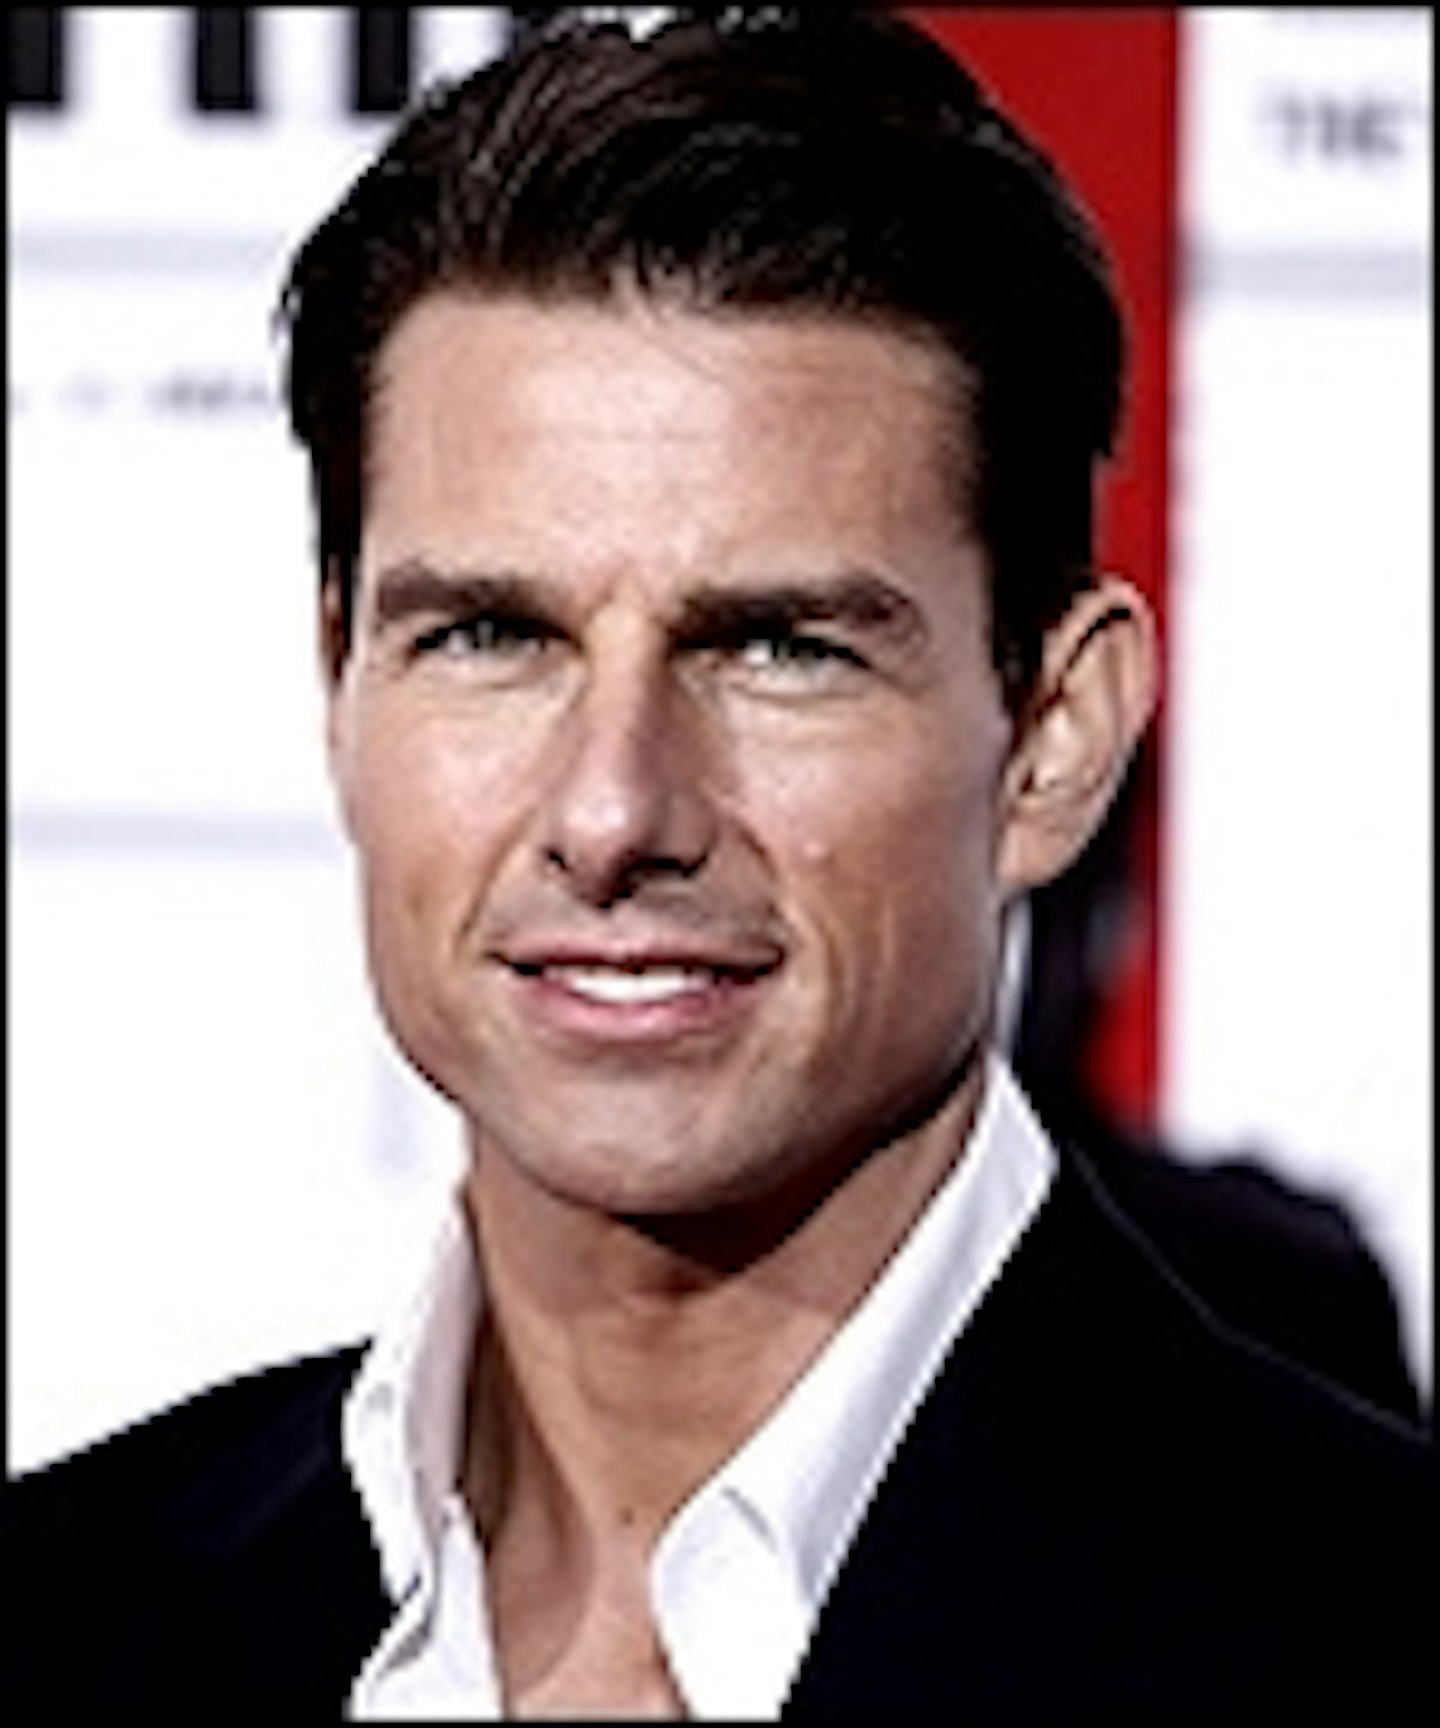 Tom Cruise Threatens More Les Grossman